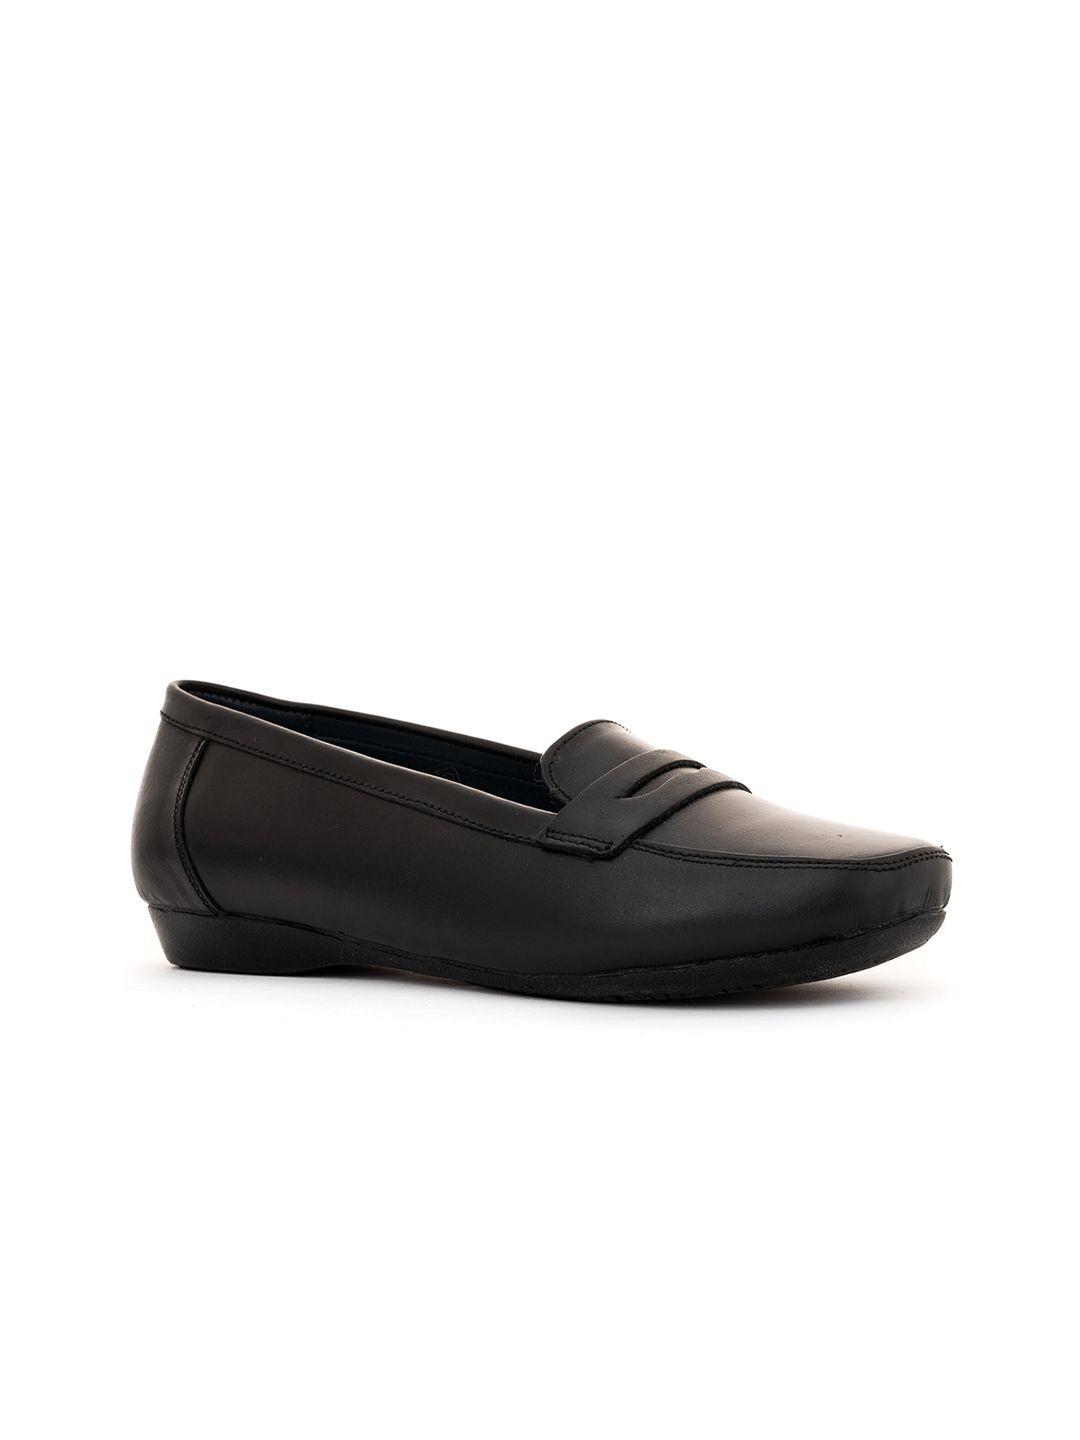 khadims-women-black-leather-loafers